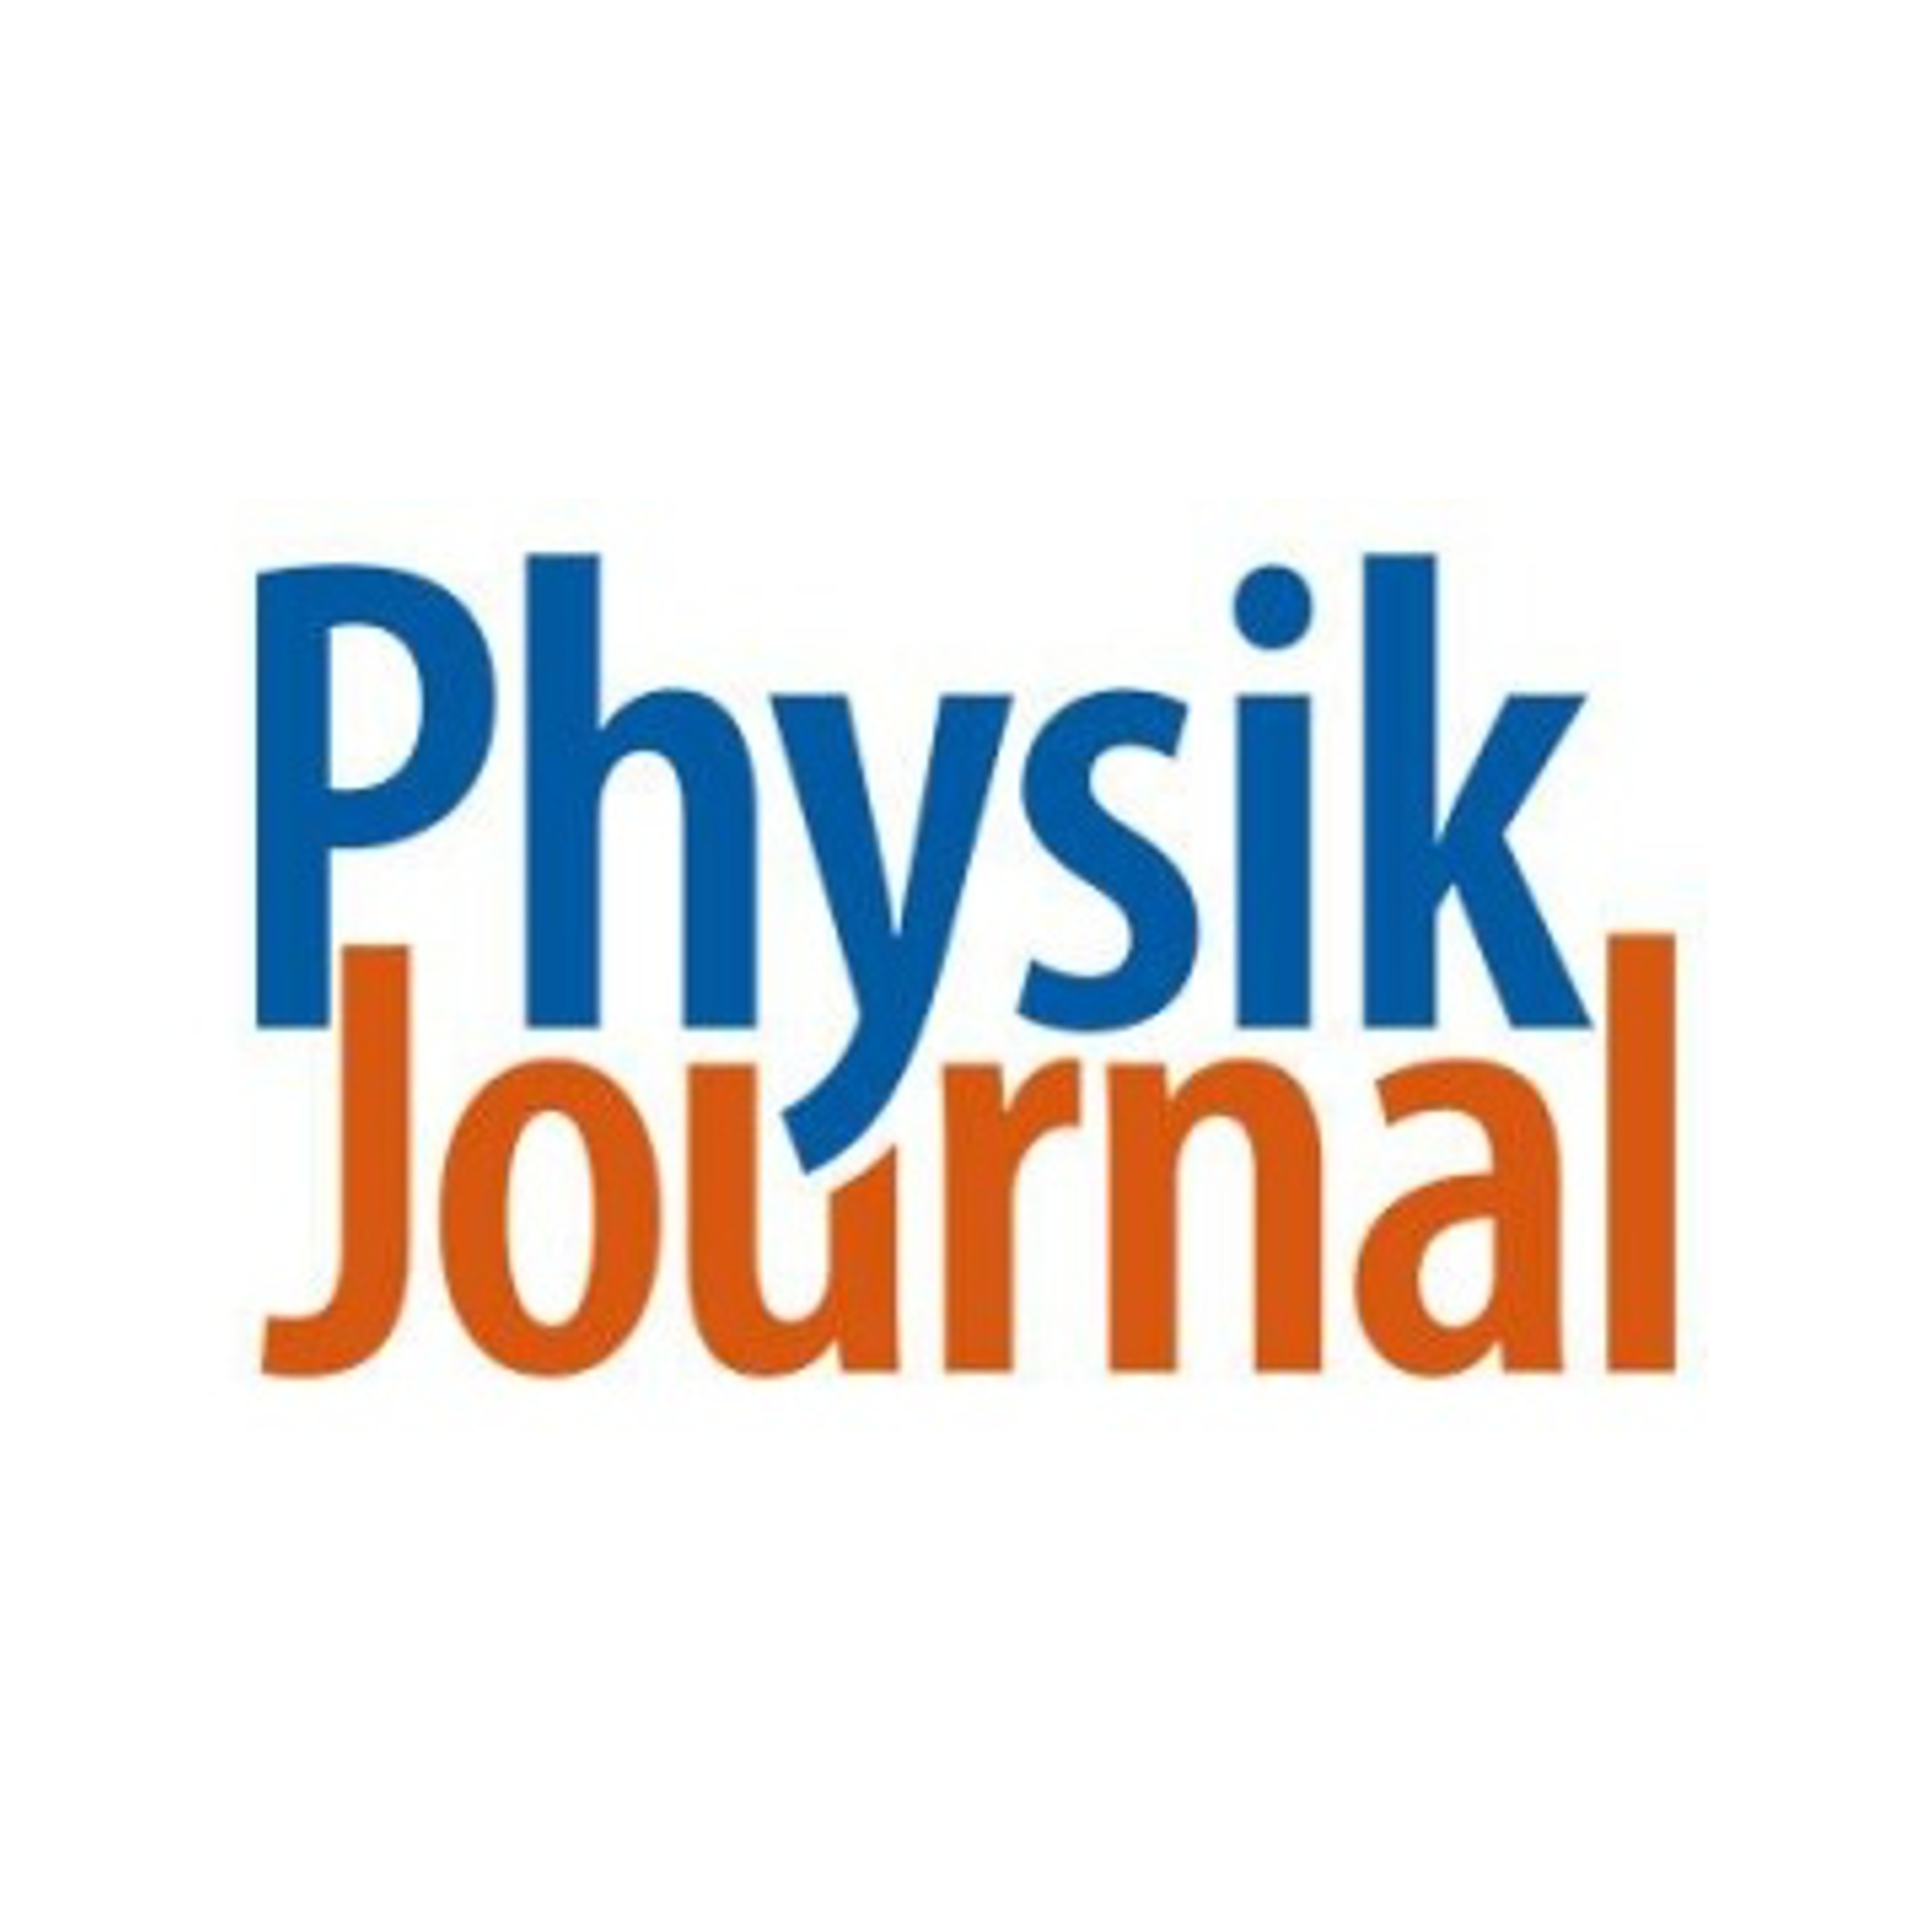 physik journal montiert